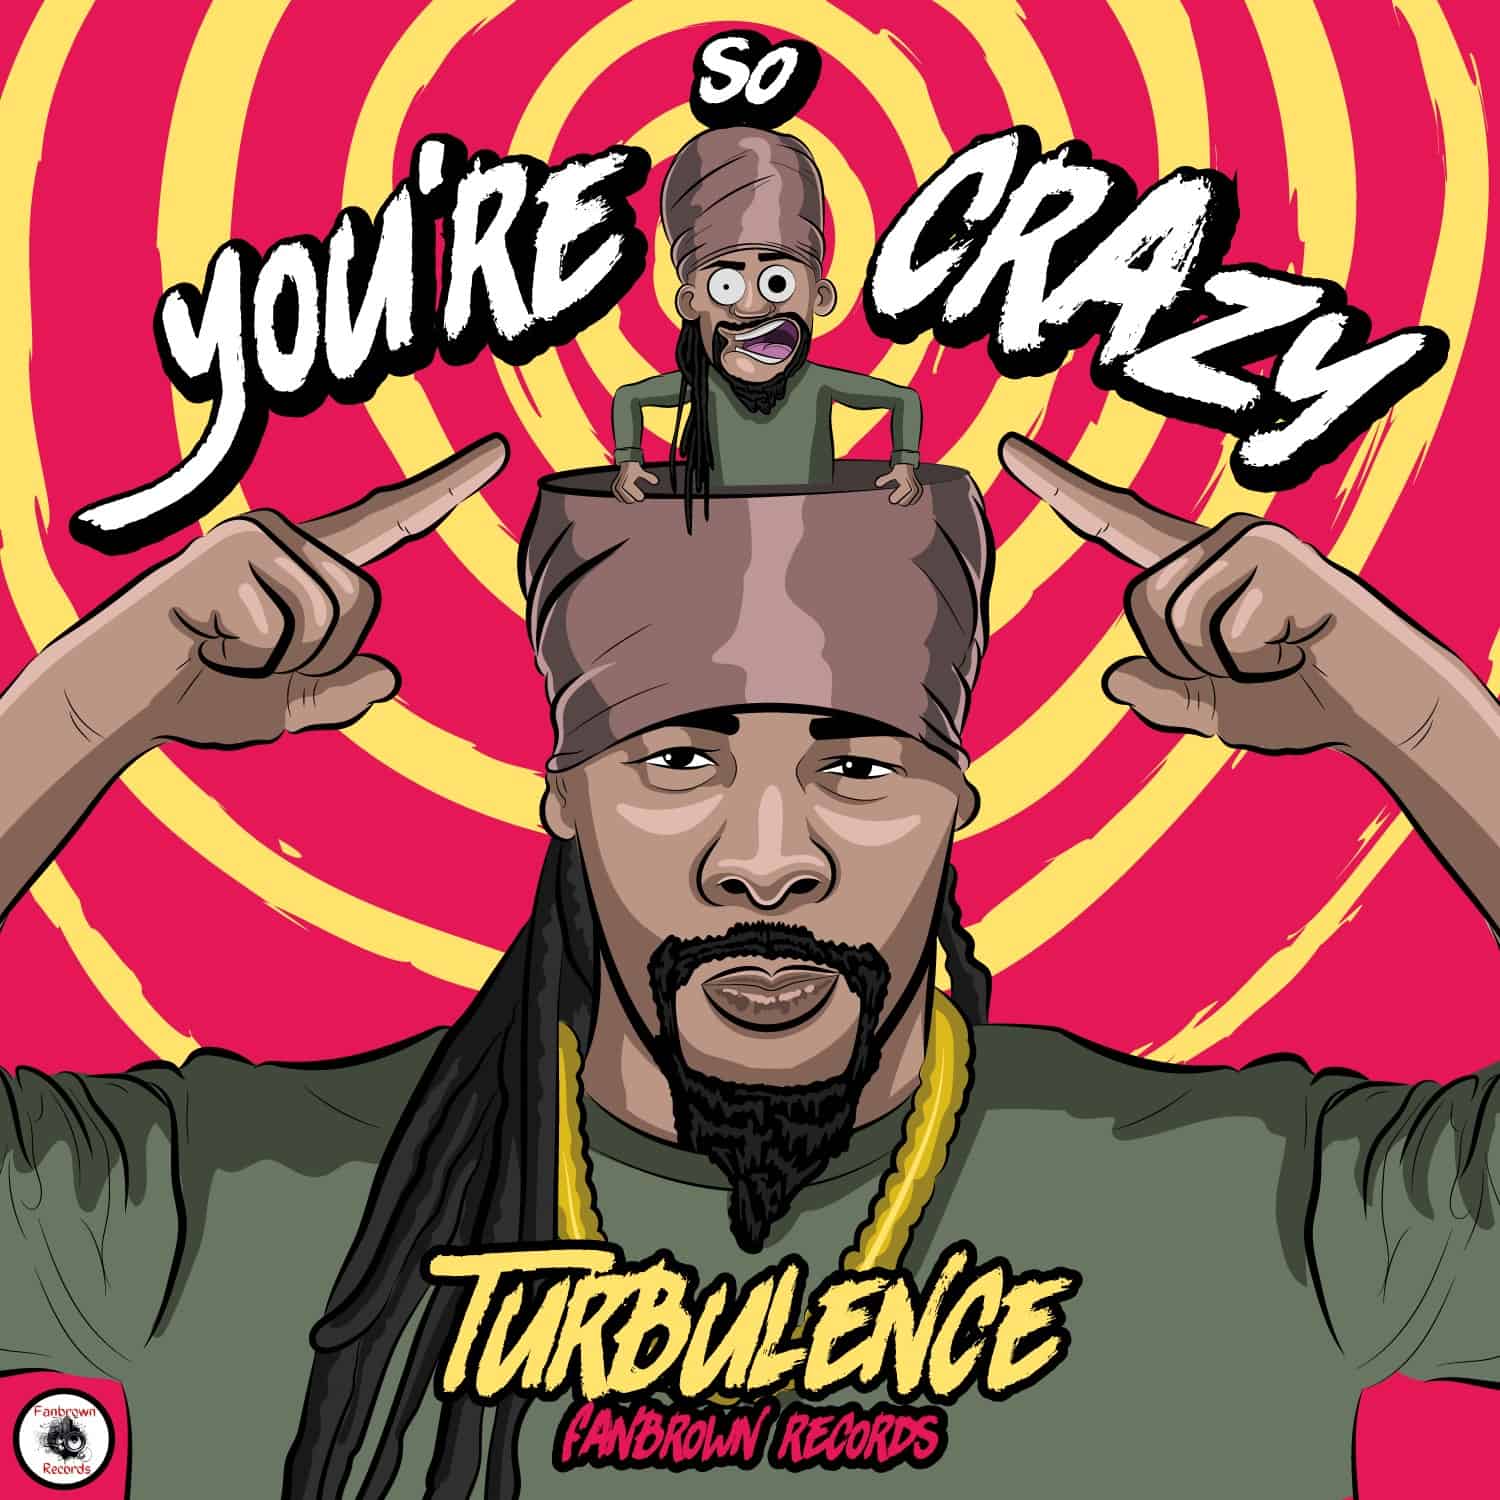 Turbulence - You